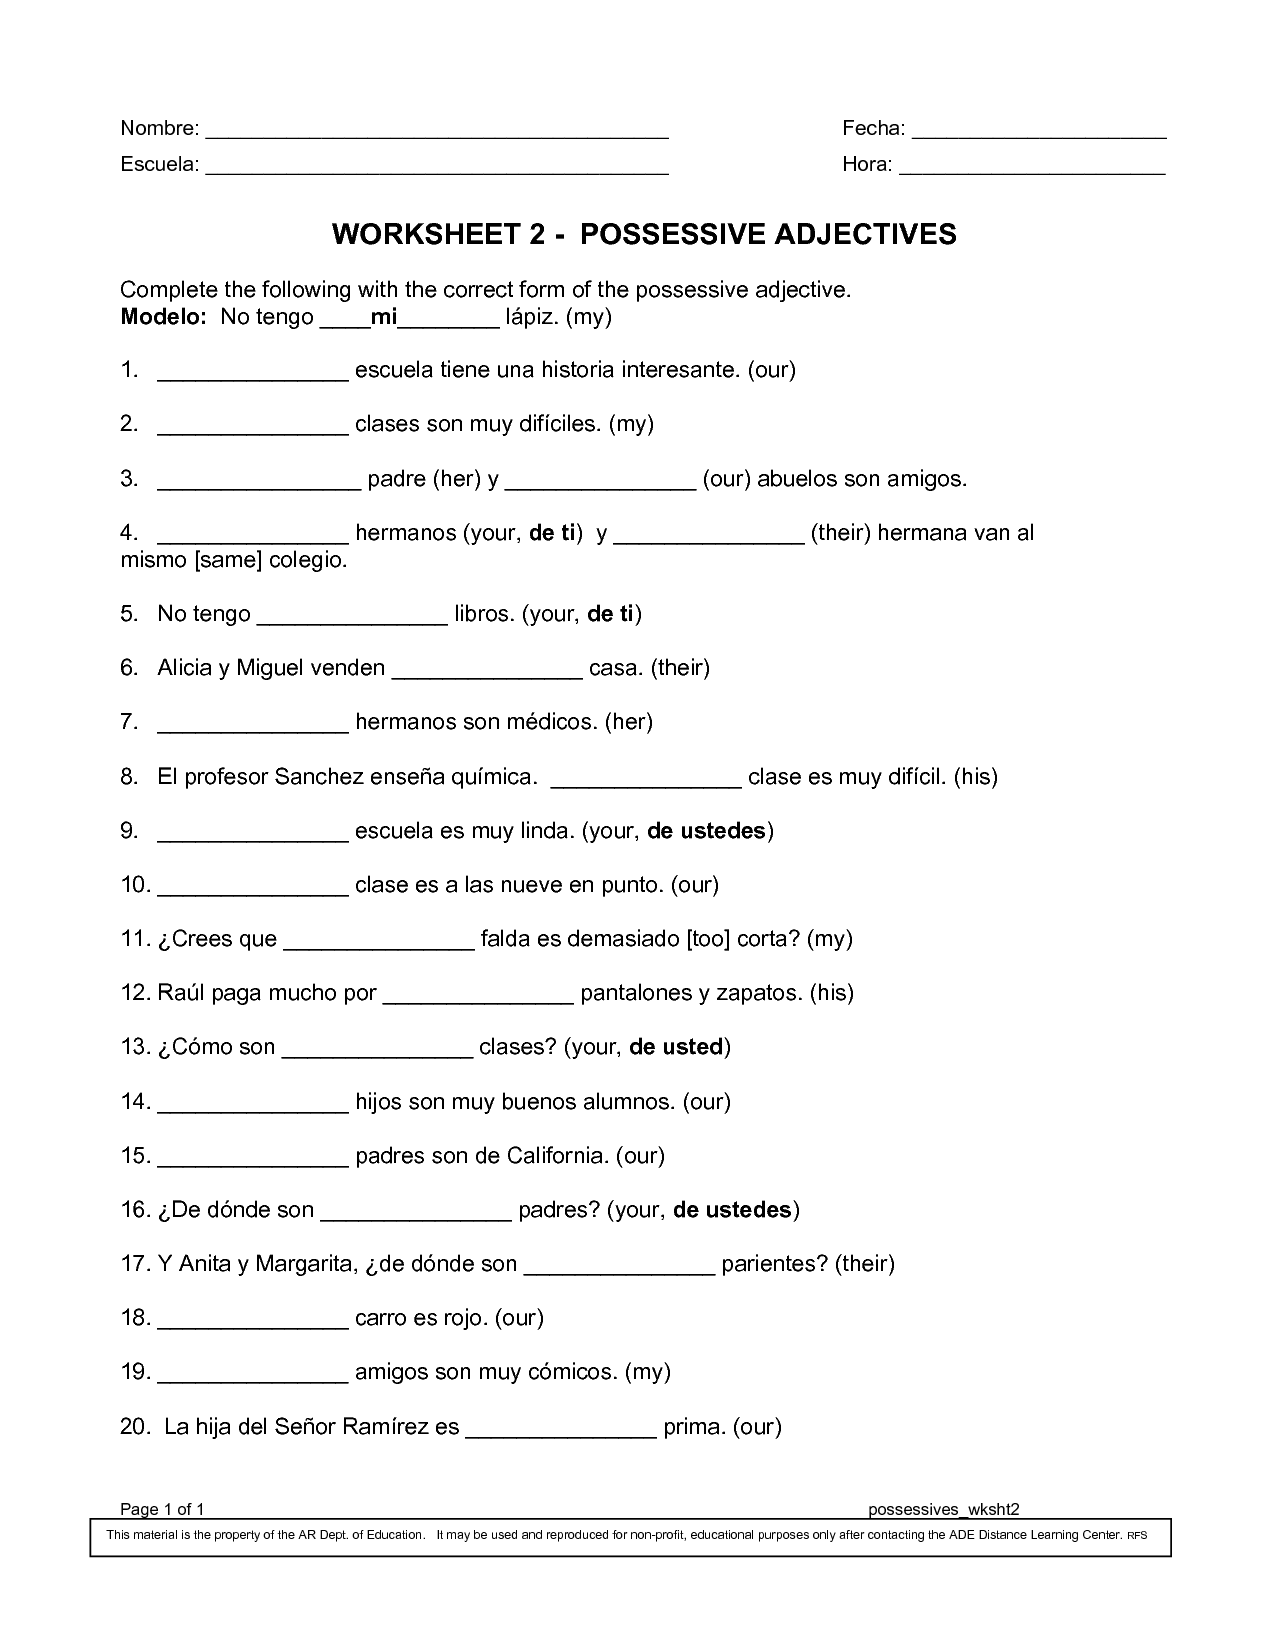 possessive-adjectives-and-pronouns-exercises-pdf